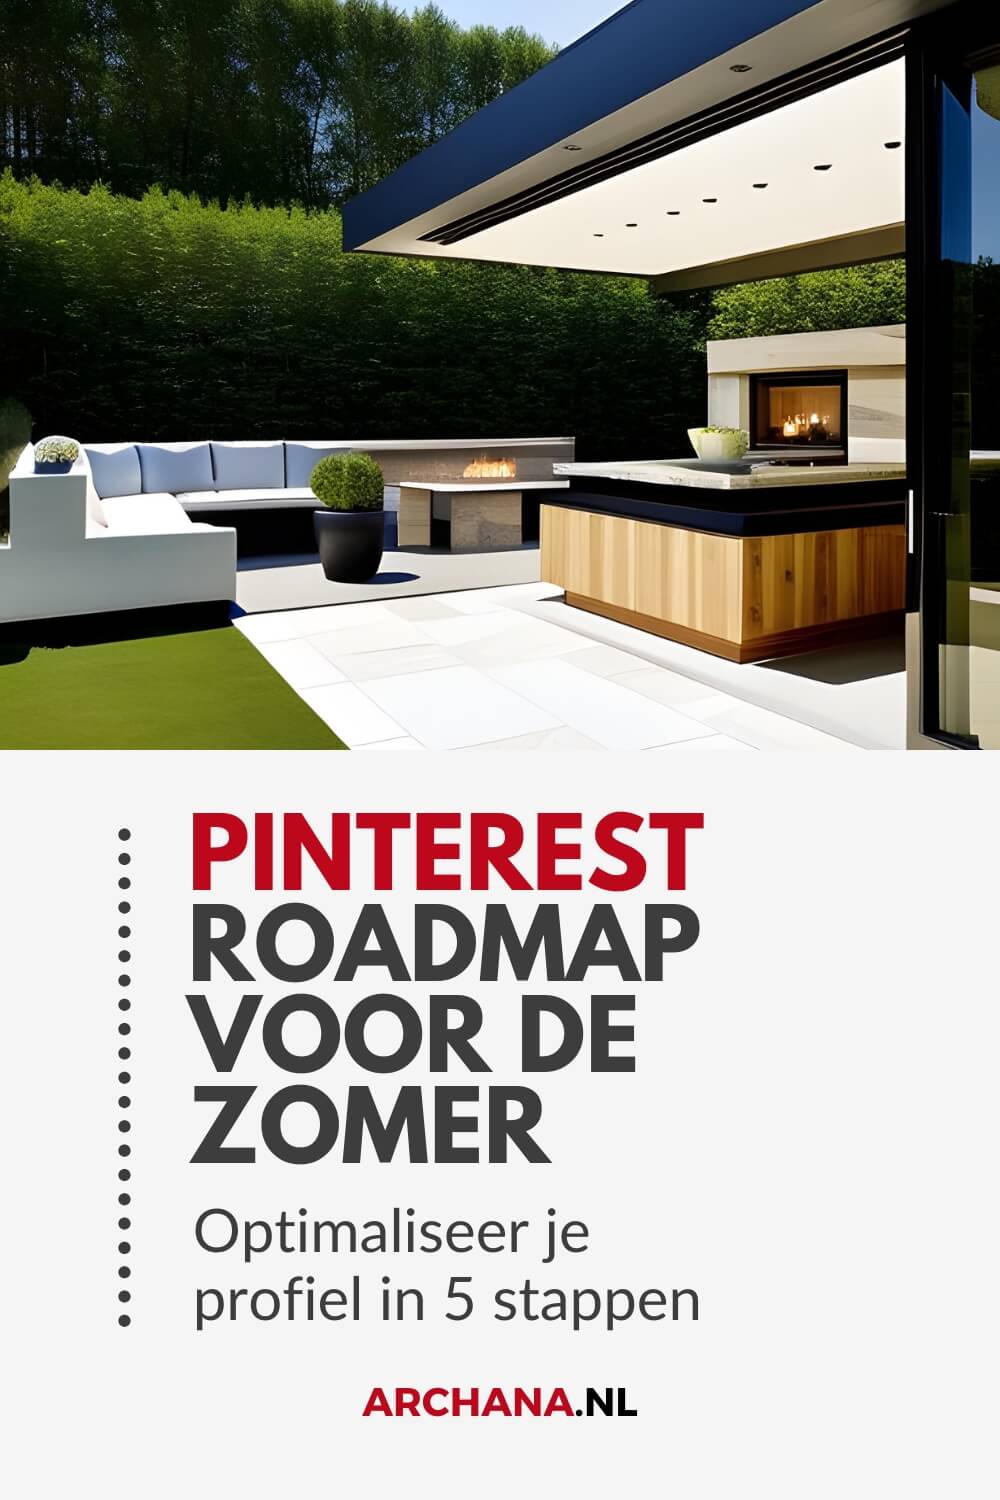 Pinterest Roadmap voor de Zomer - Optimaliseer je profiel in 5 stappen - ARCHANA.NL